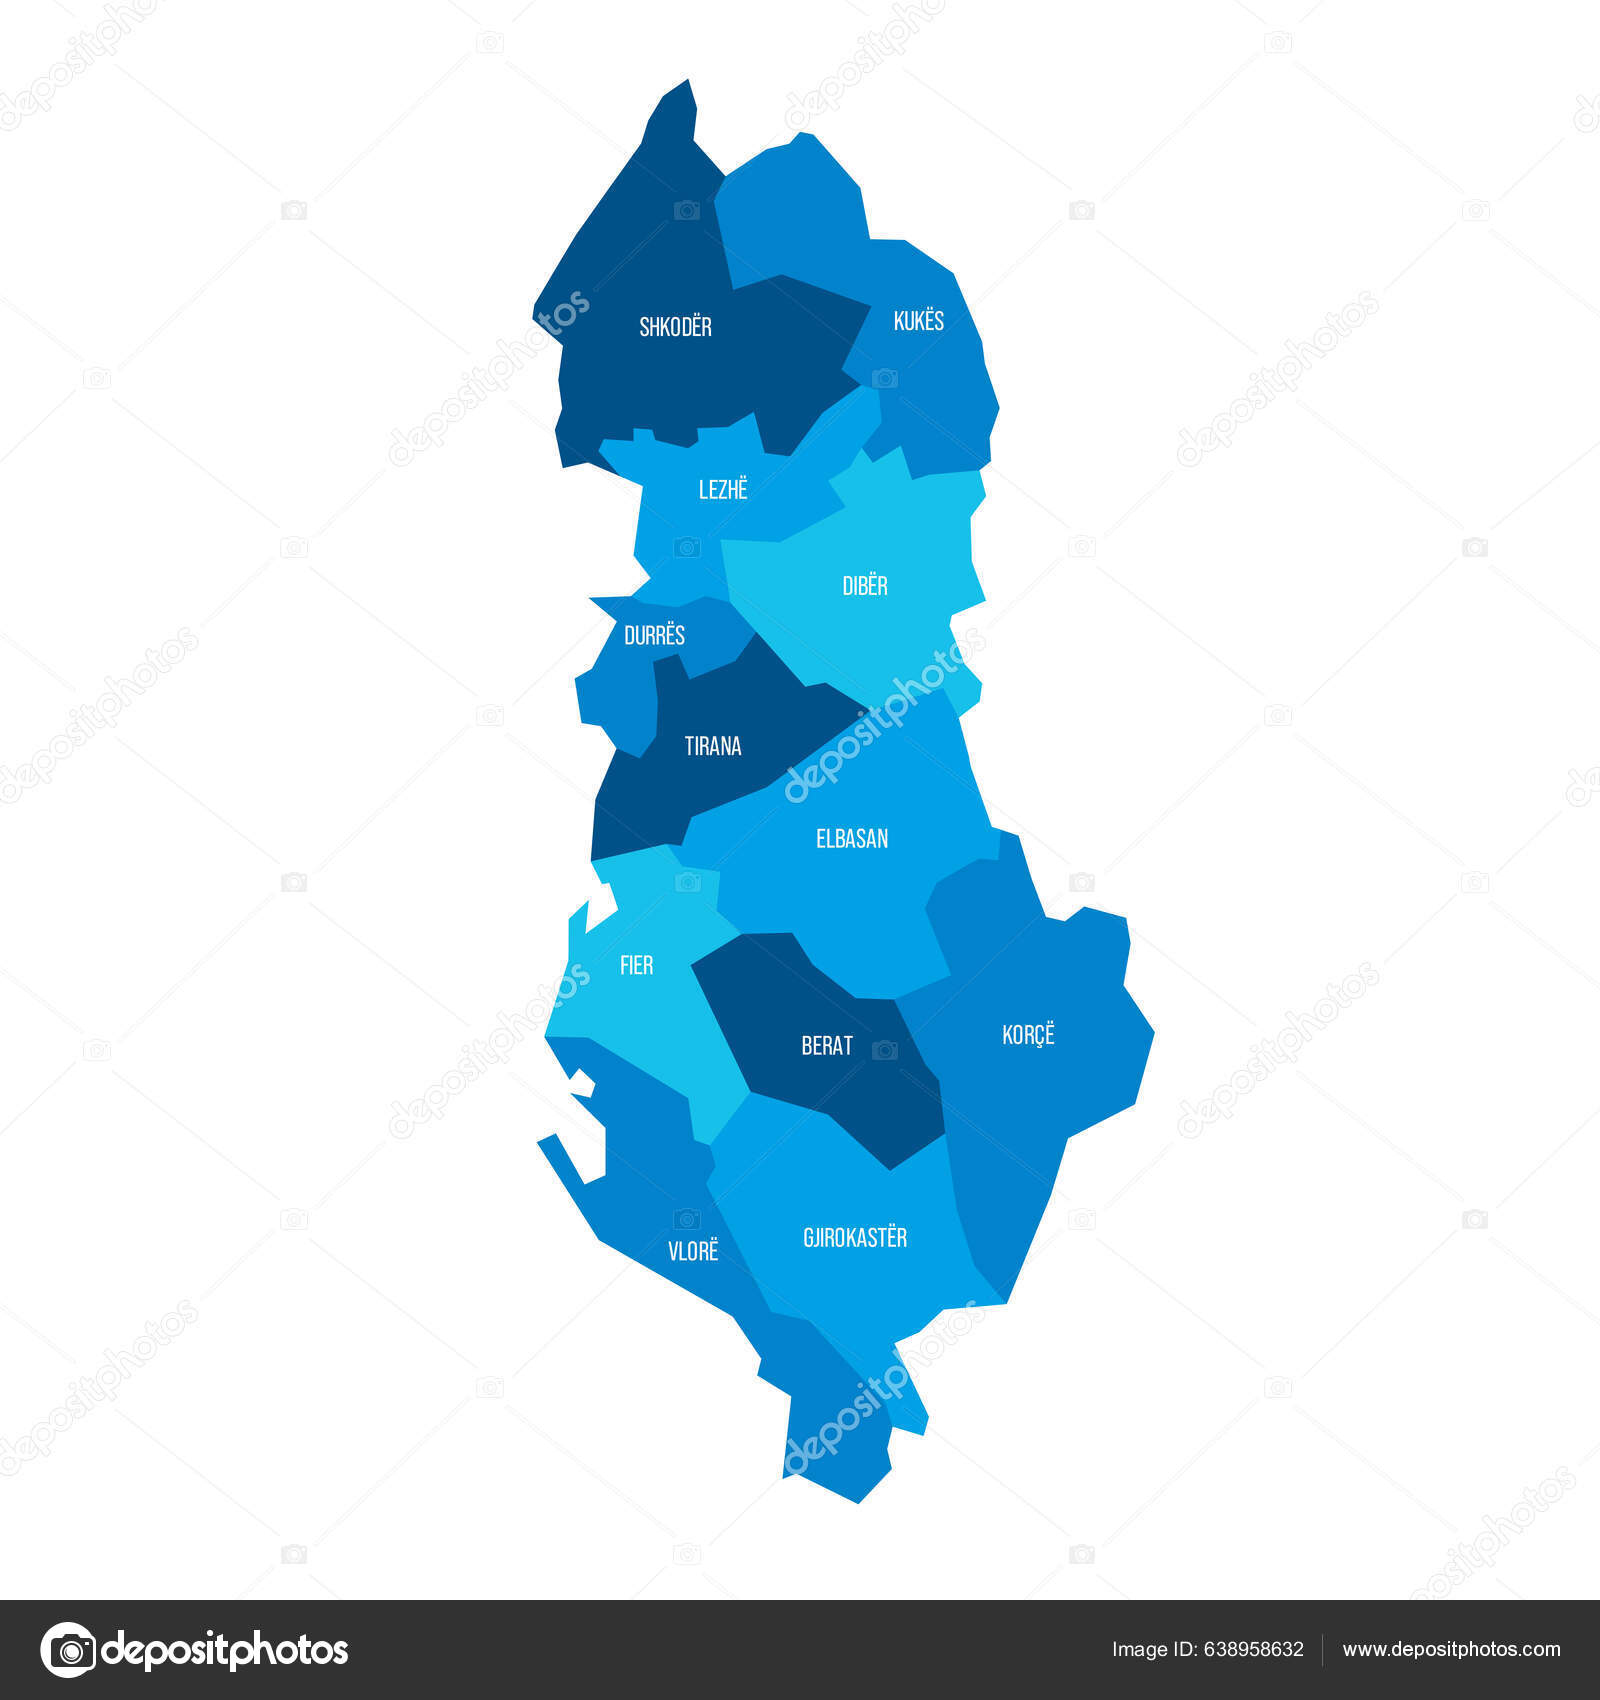 Depositphotos 638958632 Stock Illustration Albania Political Map Administrative Divisions 